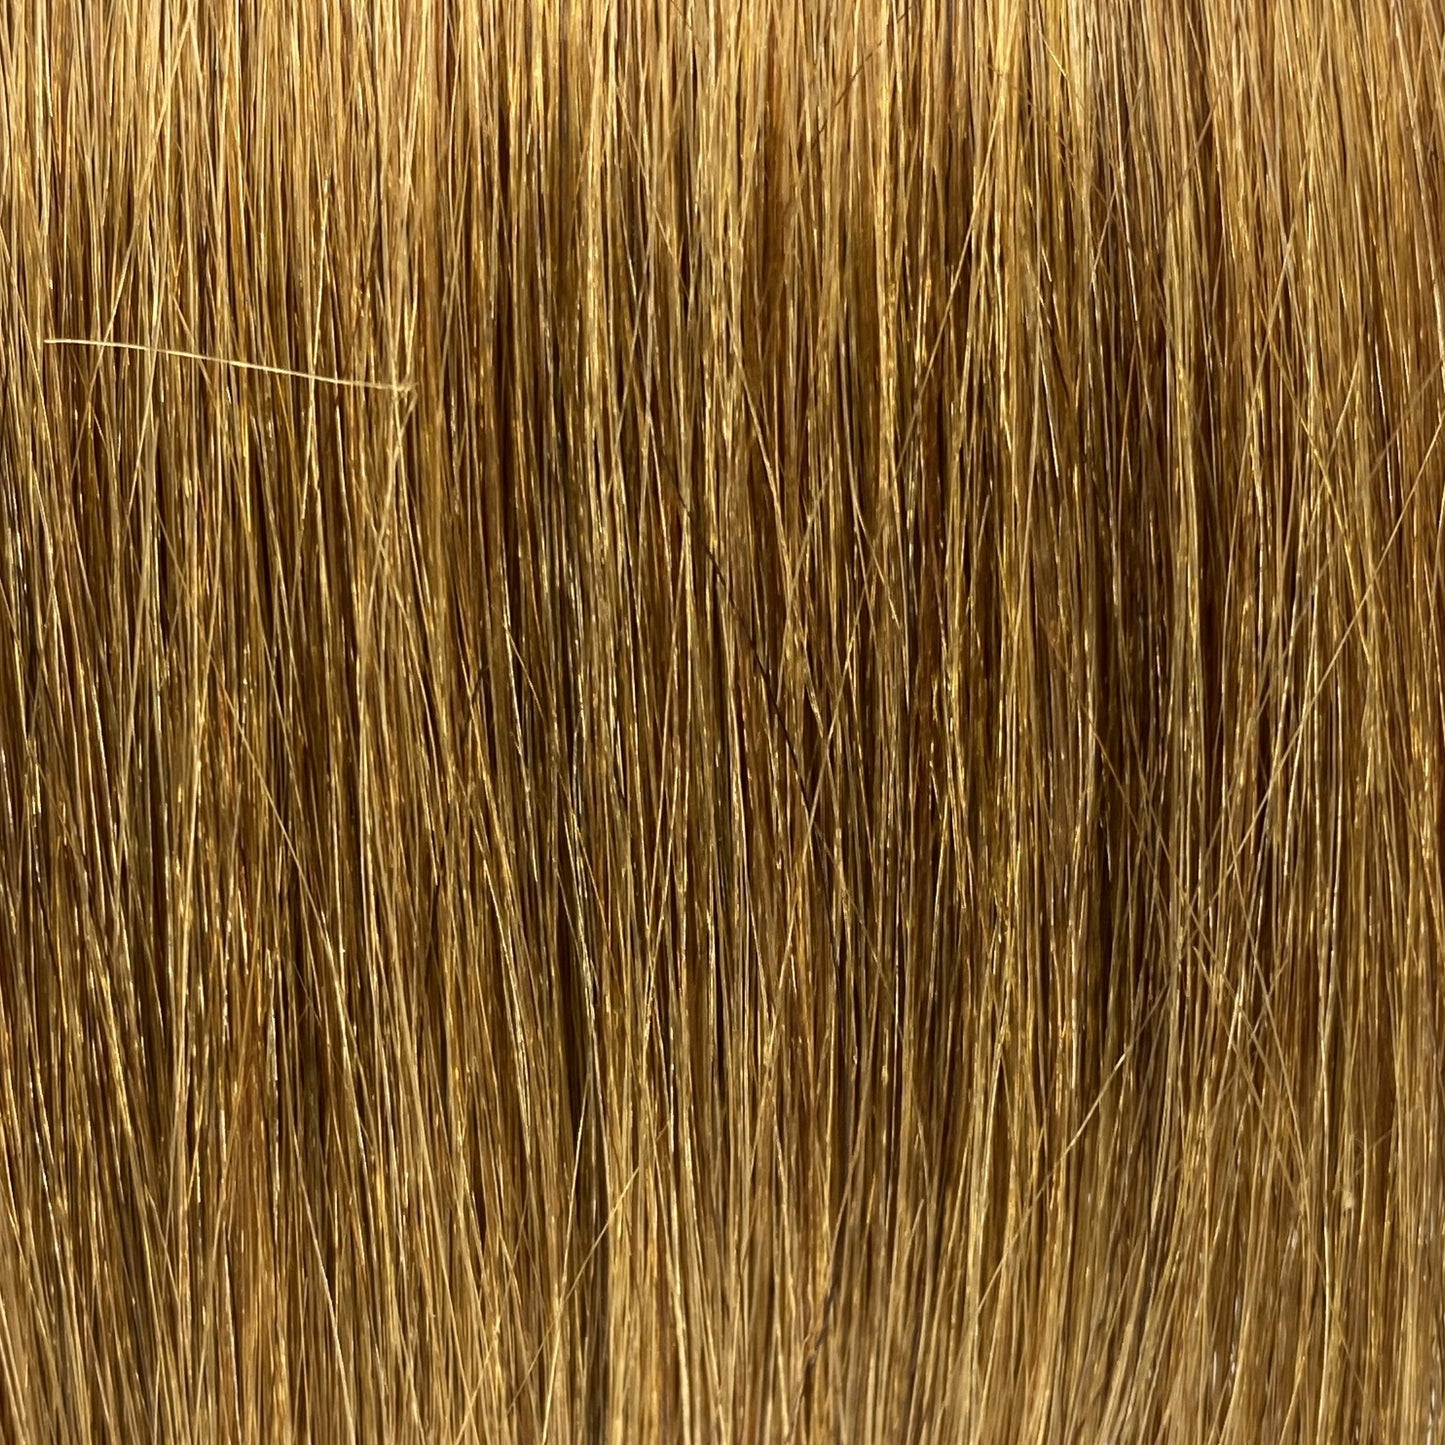 Fusion hair extensions #14 - 40cm/16 inches - Copper Golden Light Blonde Fusion Euro So Cap 